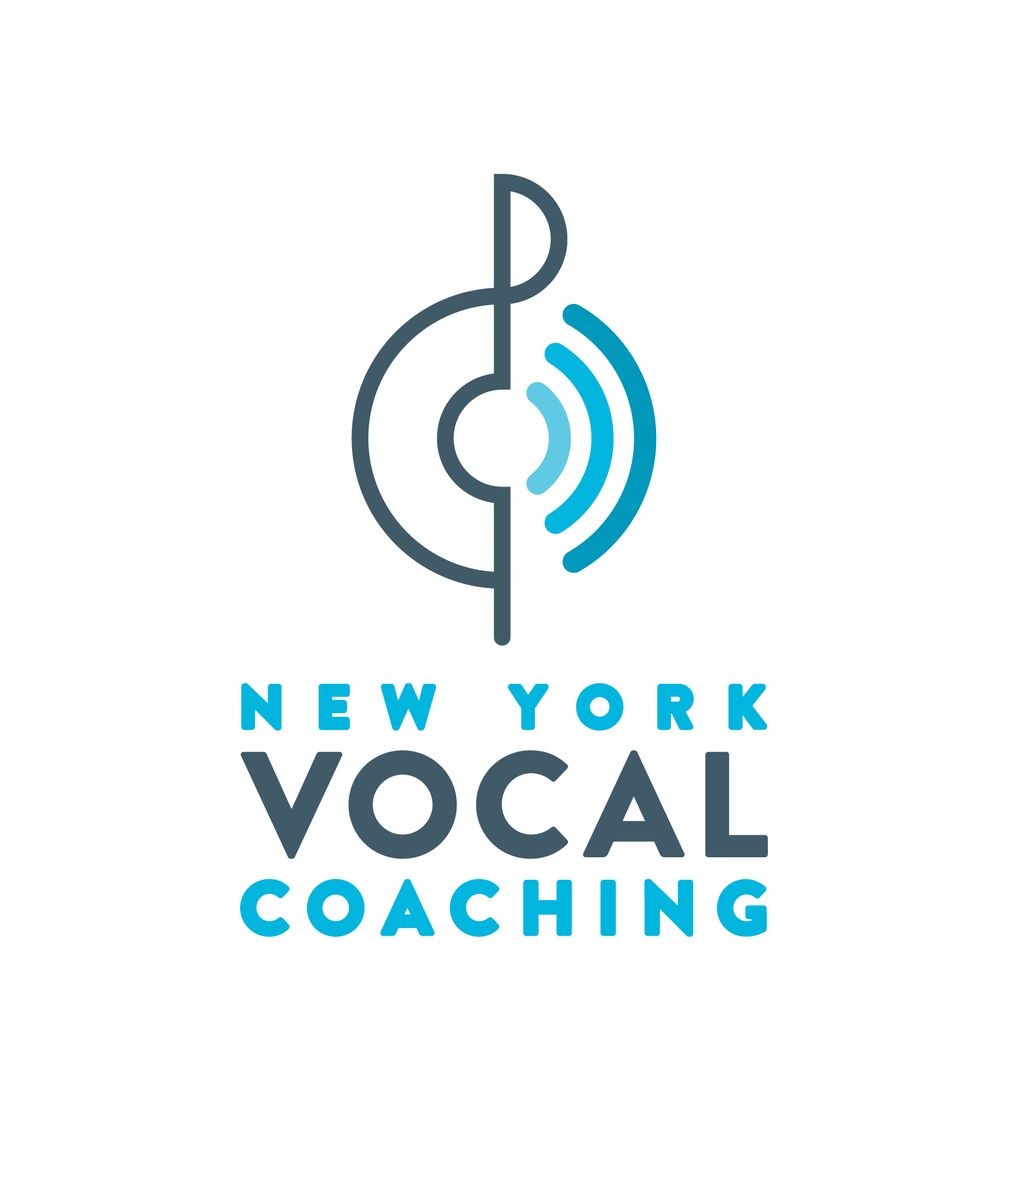 New York Vocal Coaching